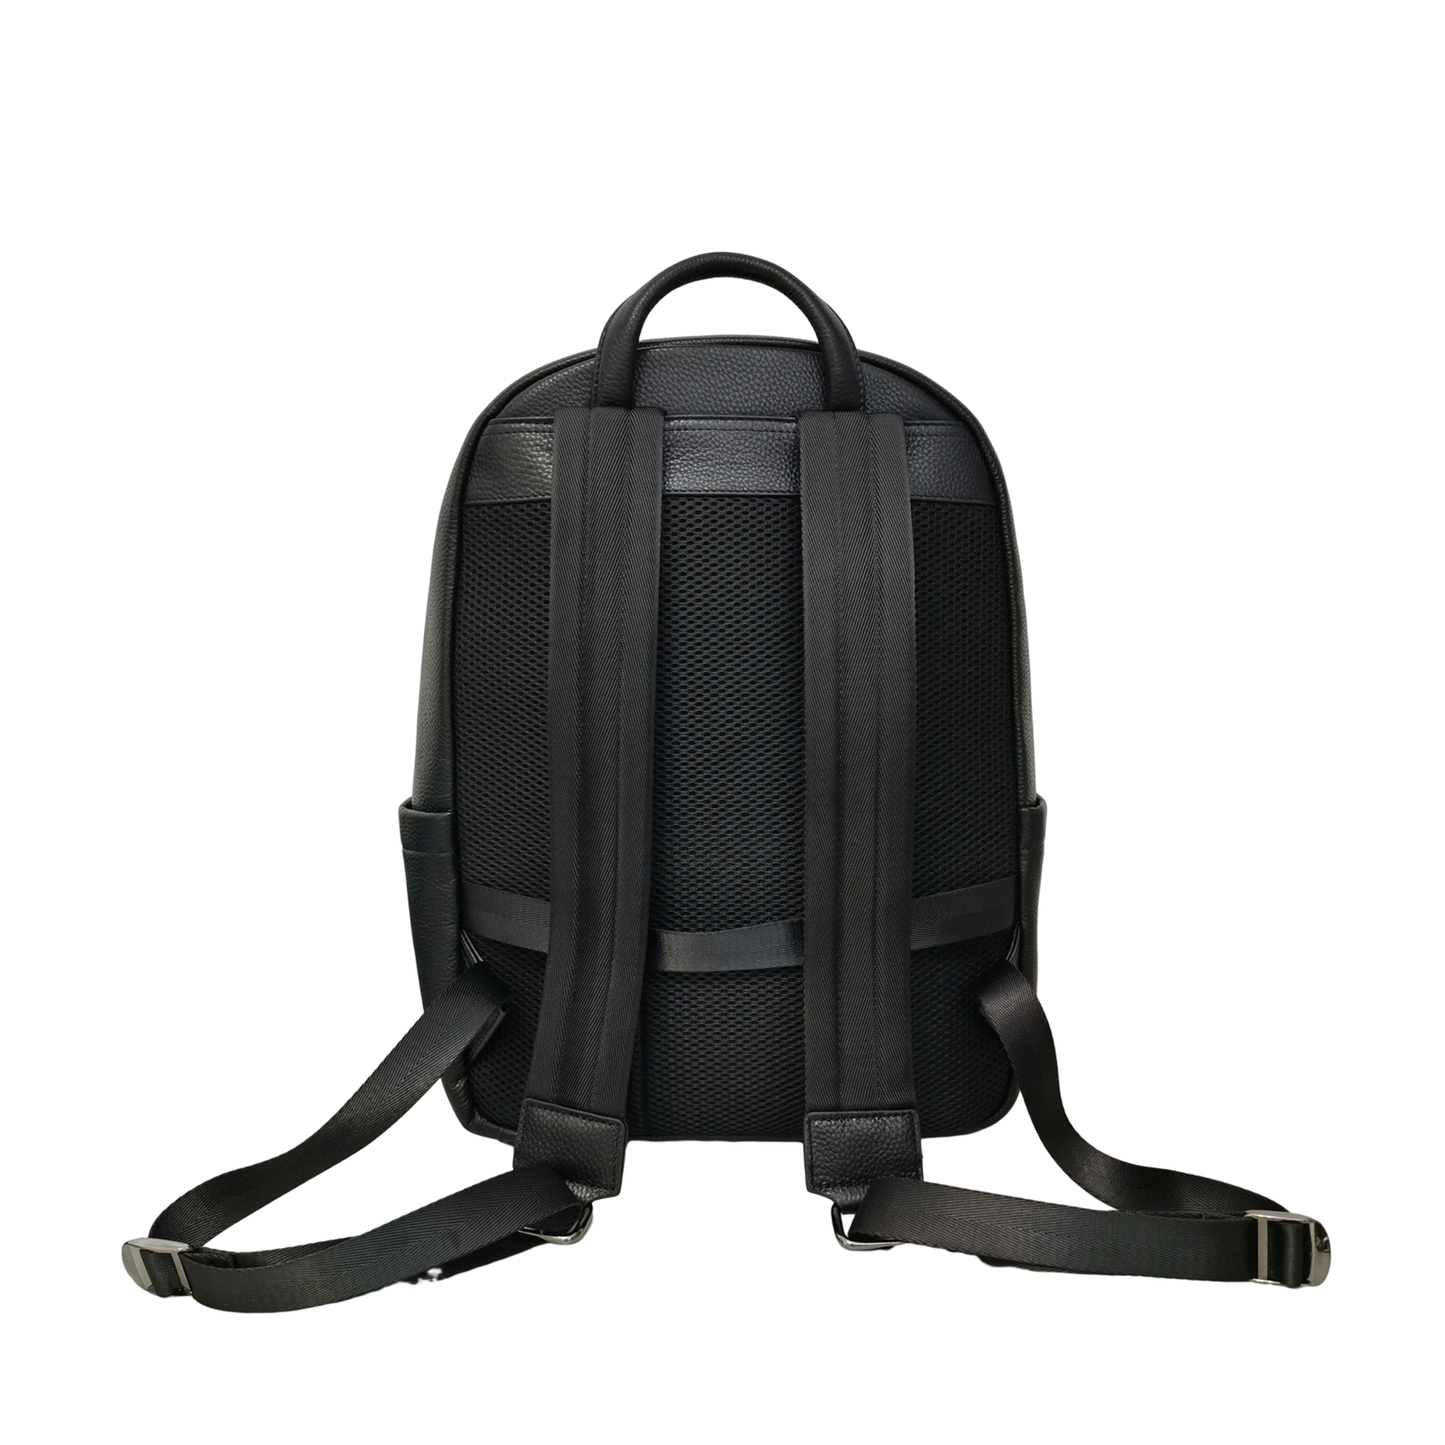 Unisex cowhide leather backpack Crescent design